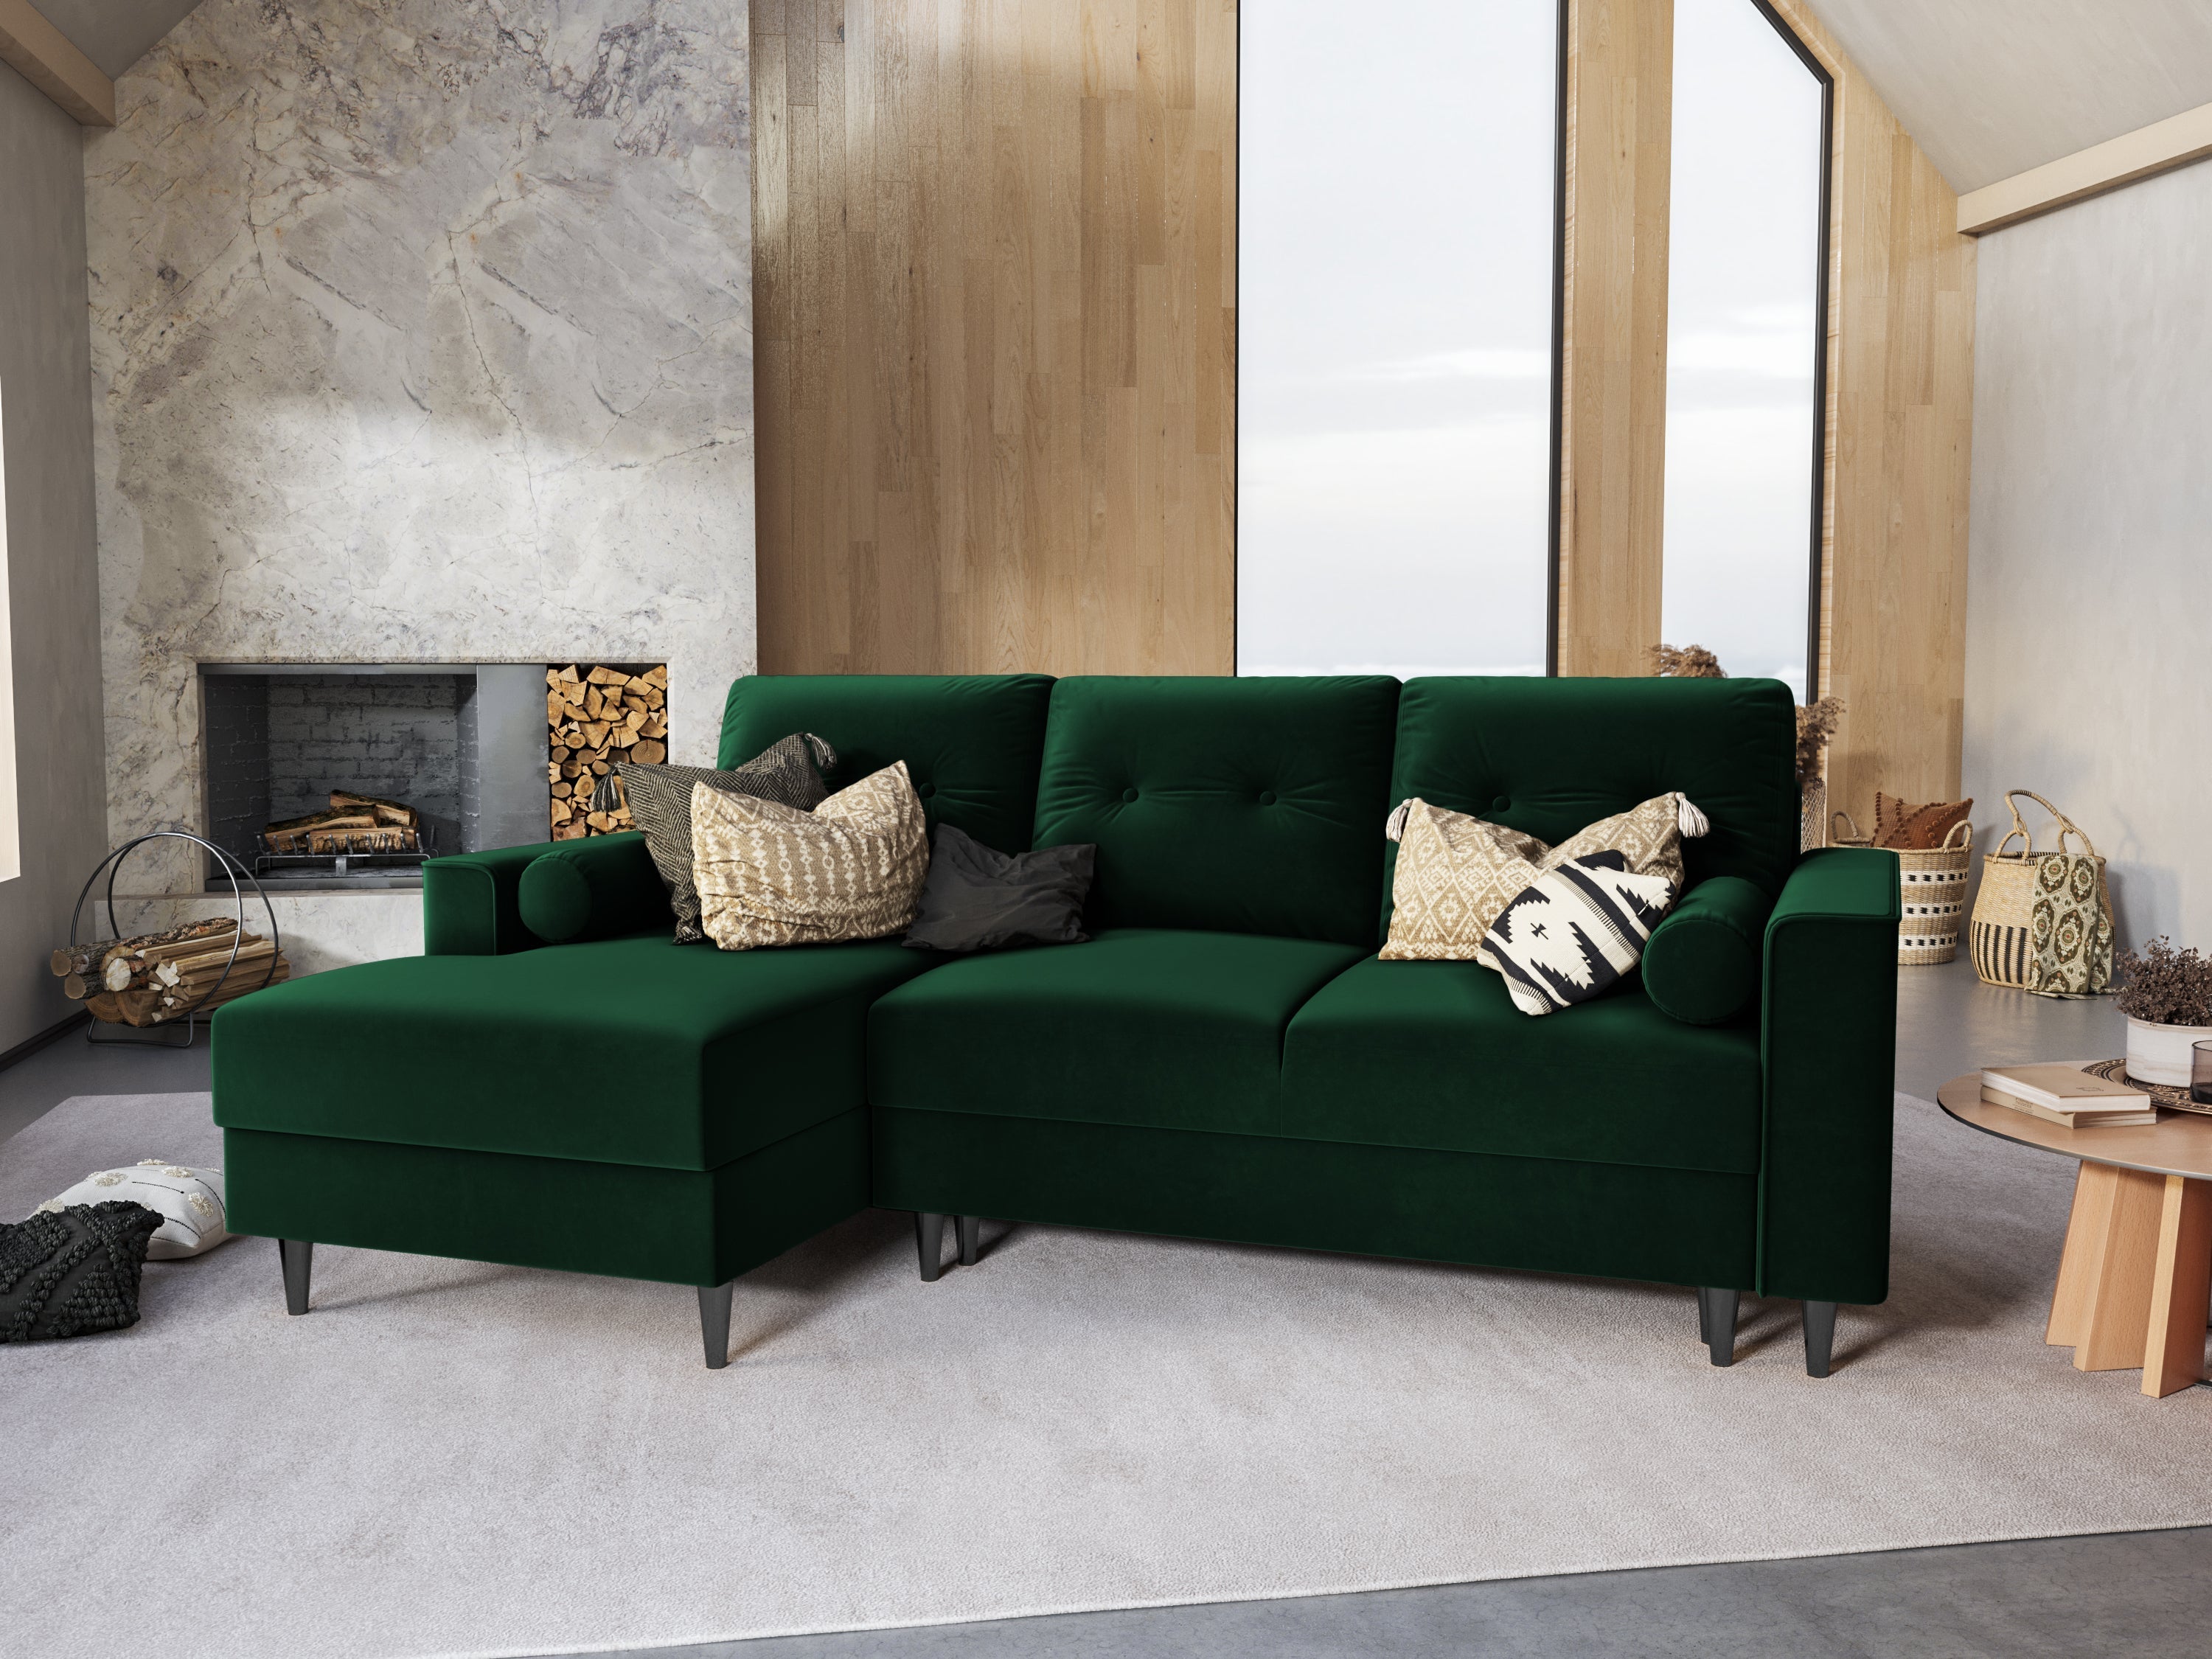 A corner for a modern living room